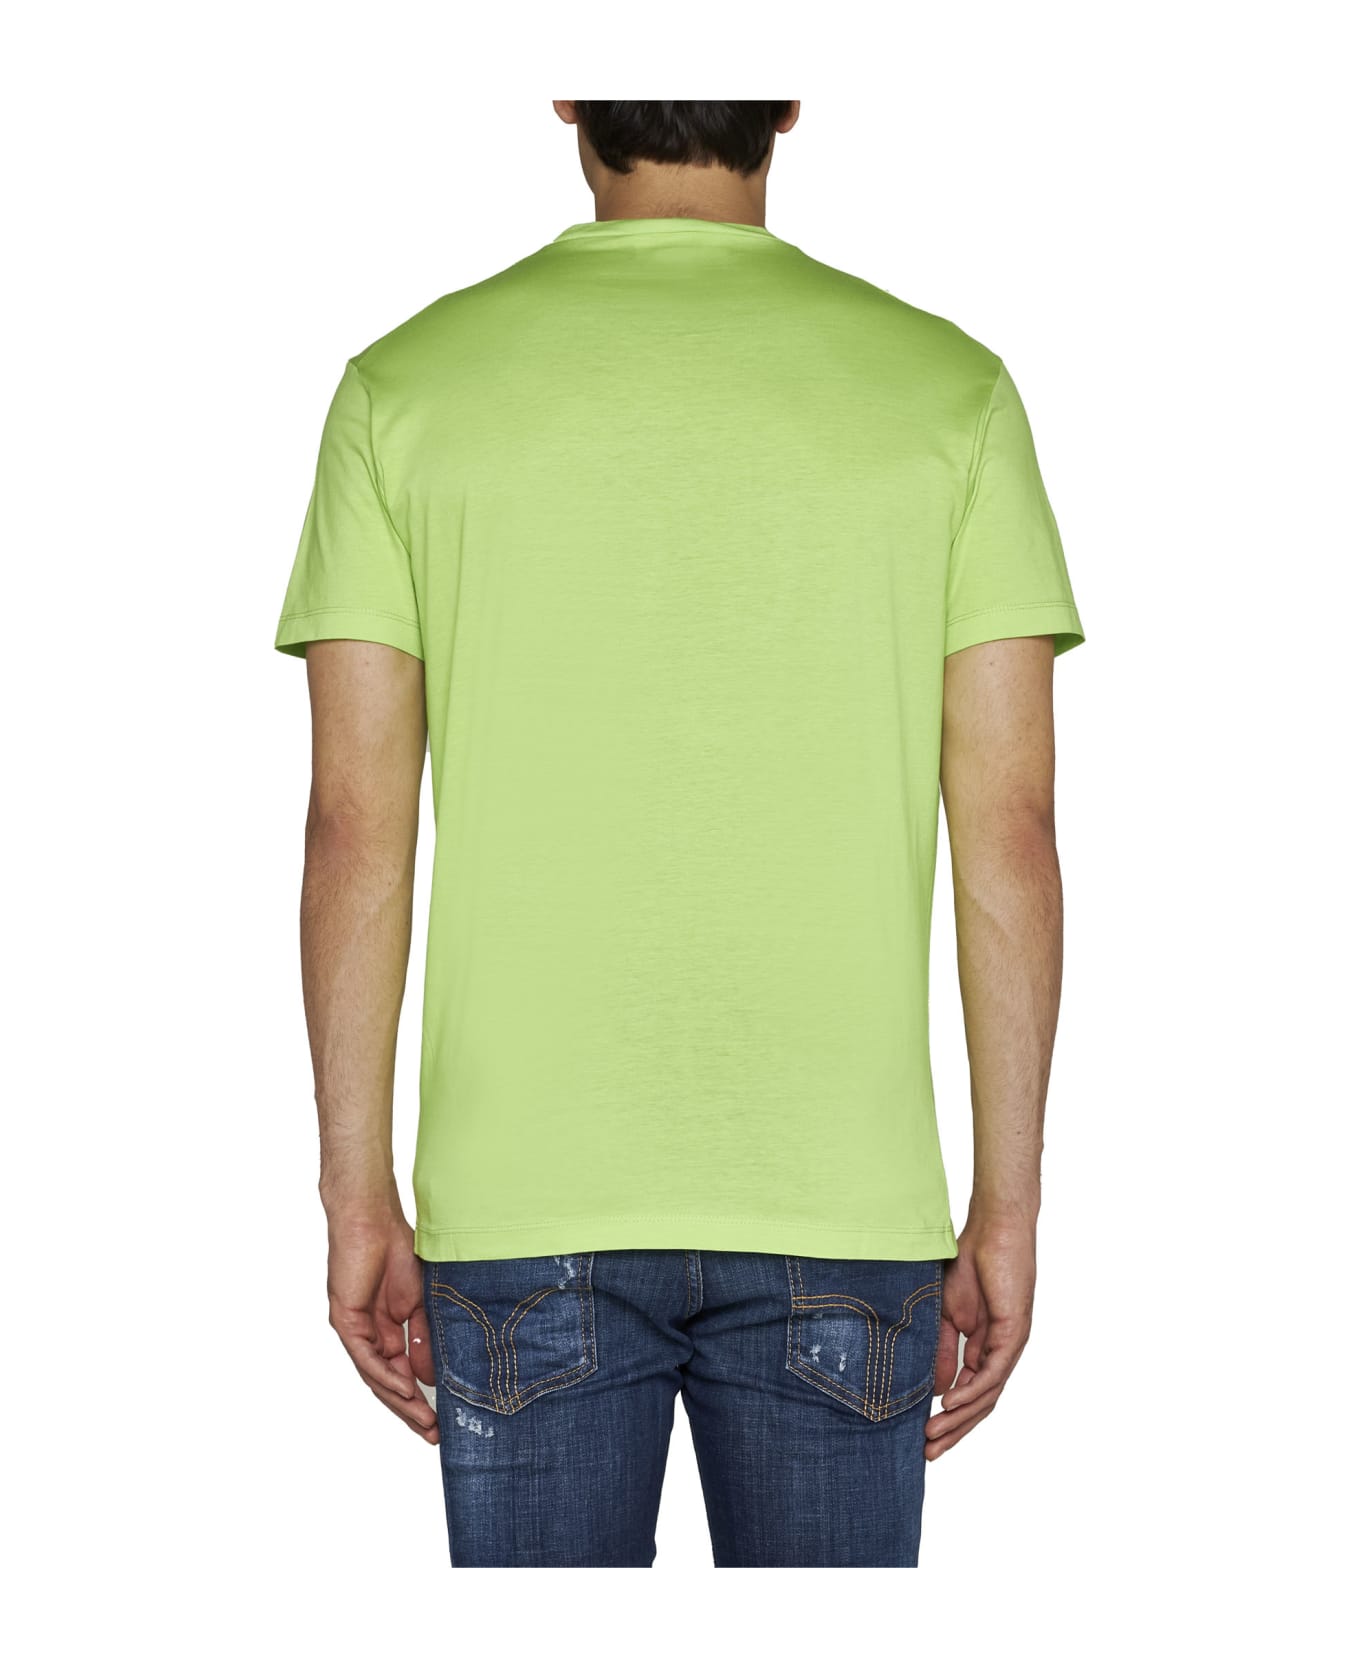 Dsquared2 Icon Logo T-shirt - Acid green